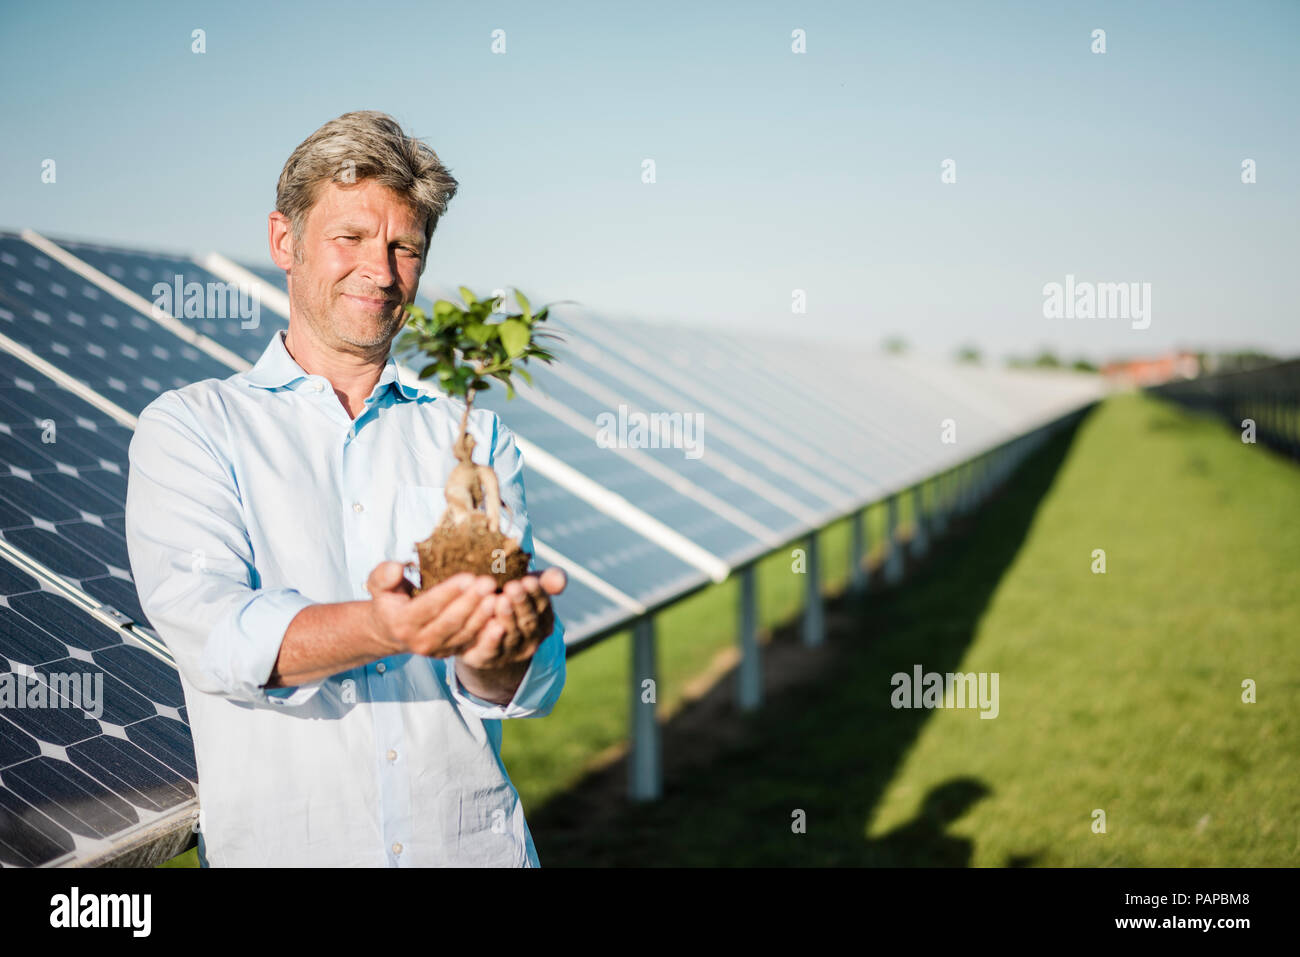 Mature man holding privet, solar plant Stock Photo